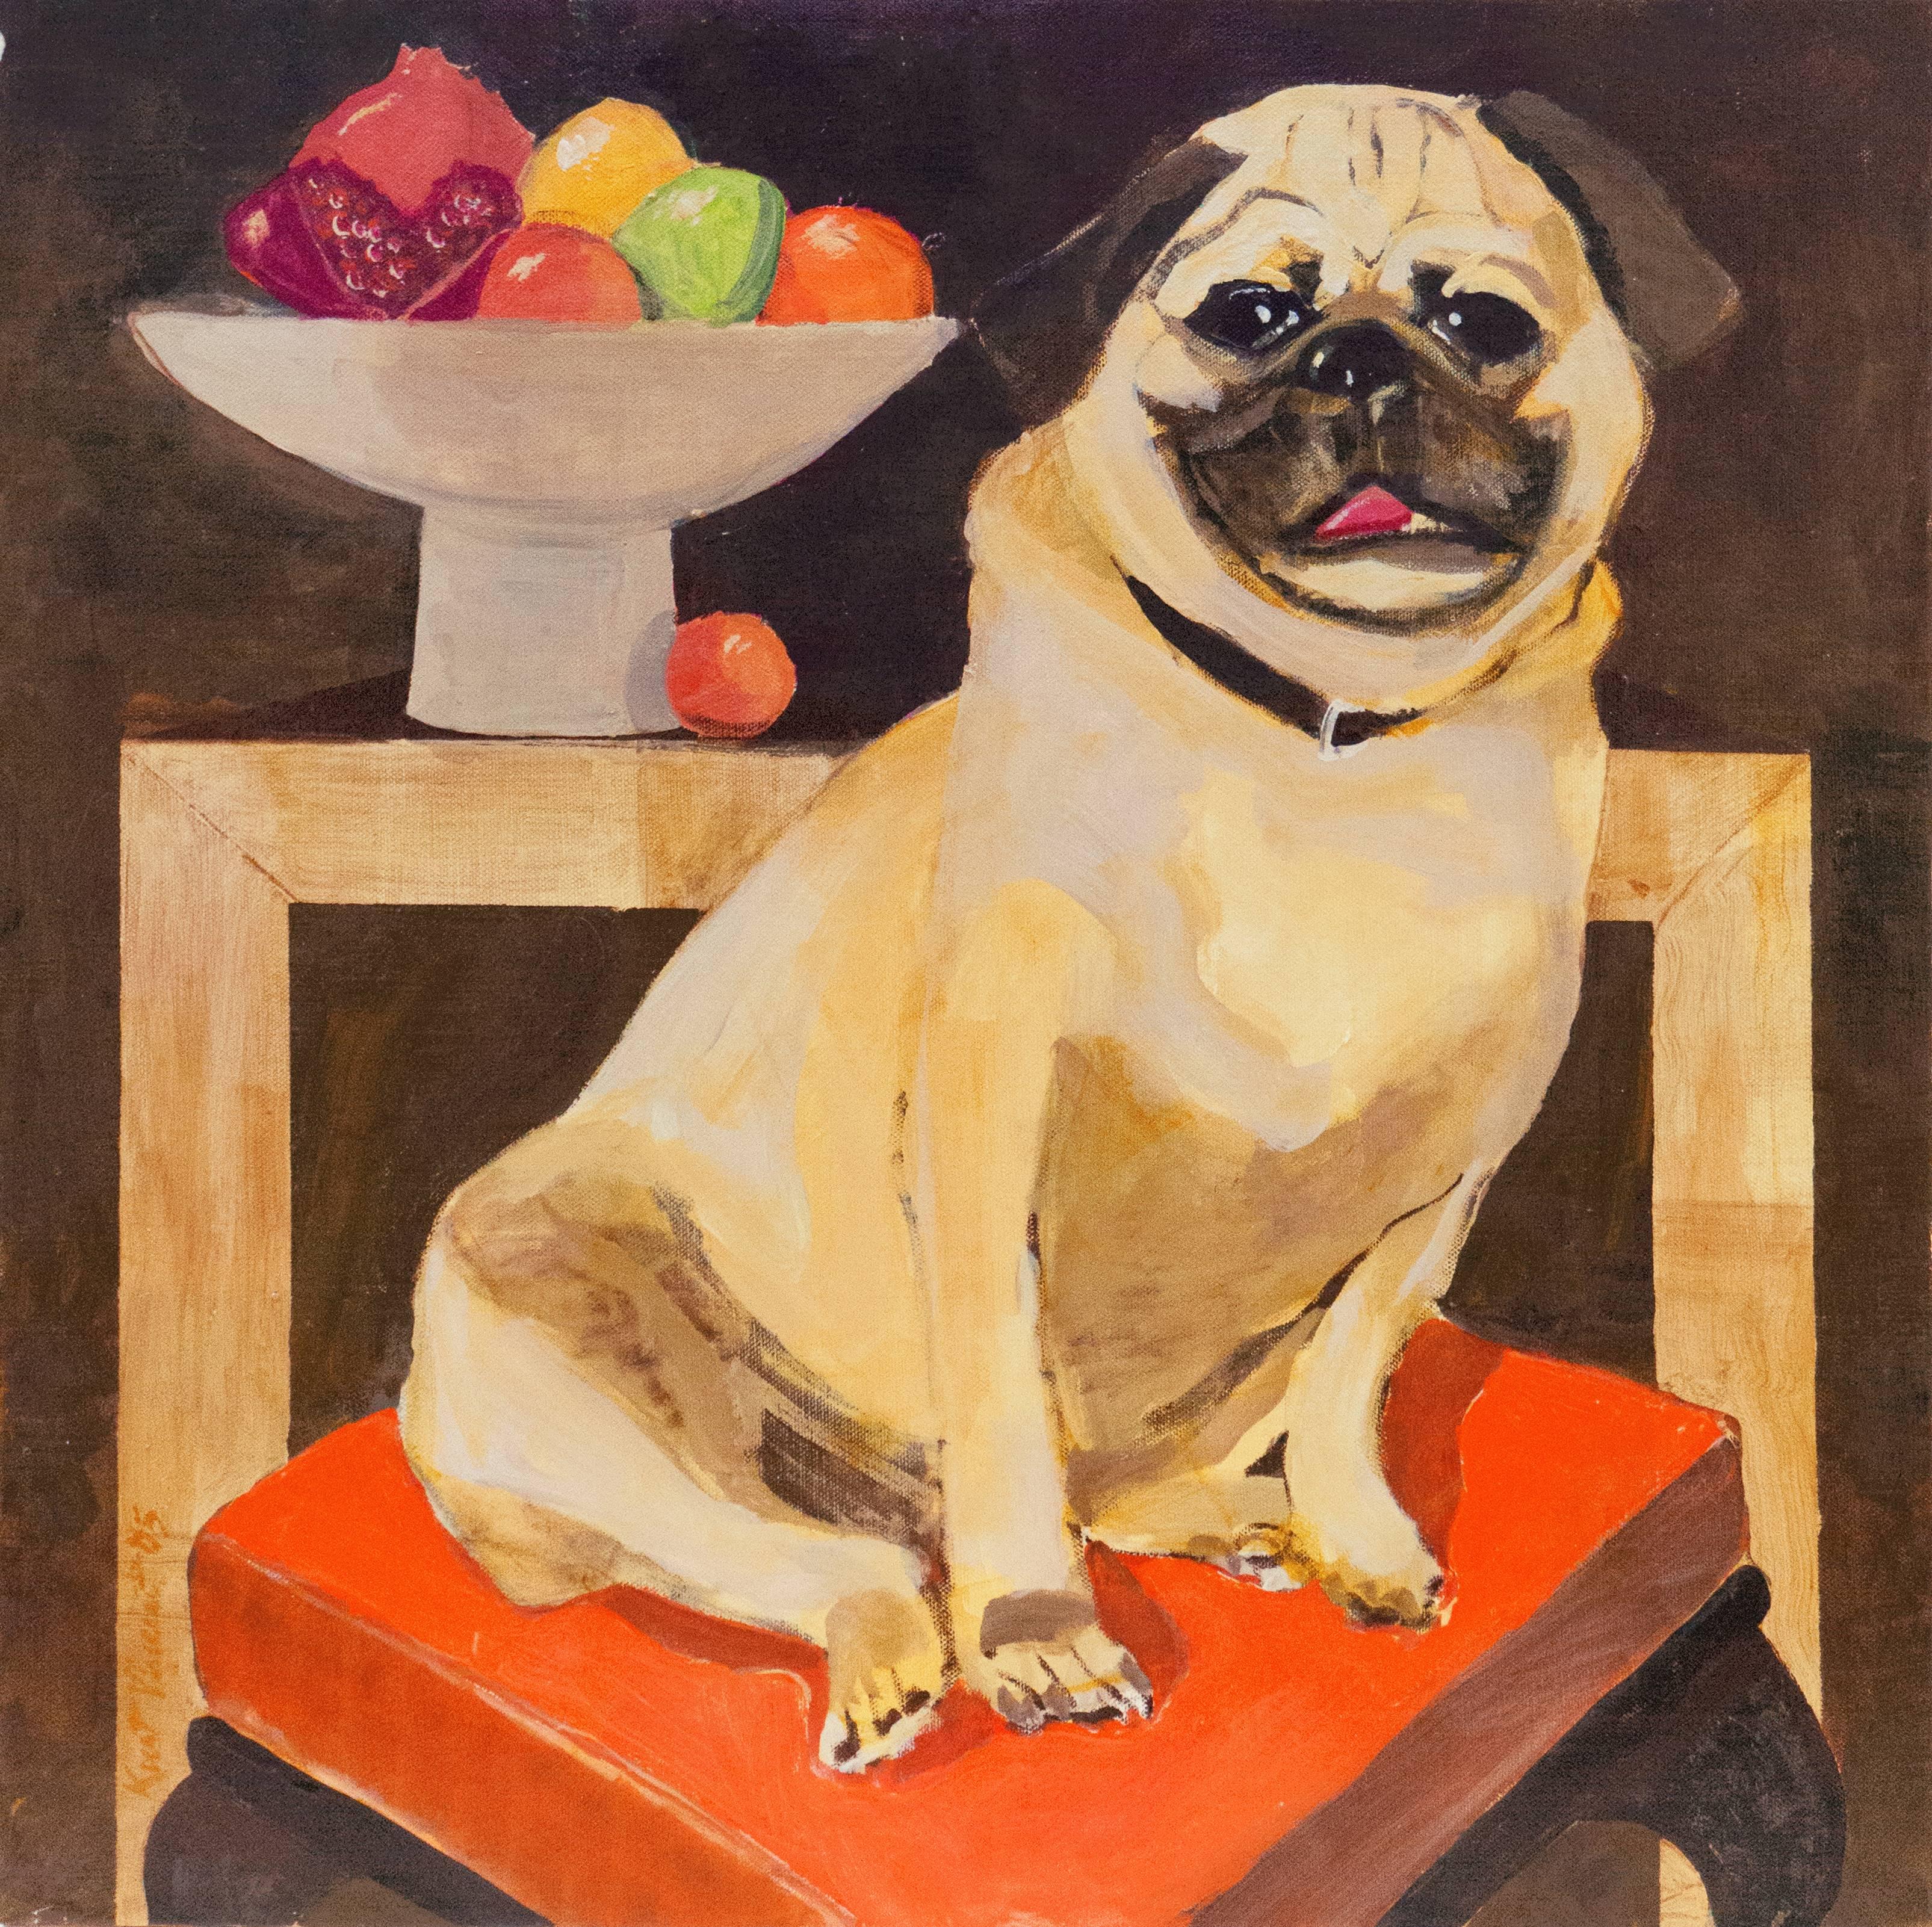 Kurt Vincent Animal Painting - 'Still Life with a Pug', Modernist Animal Portrait